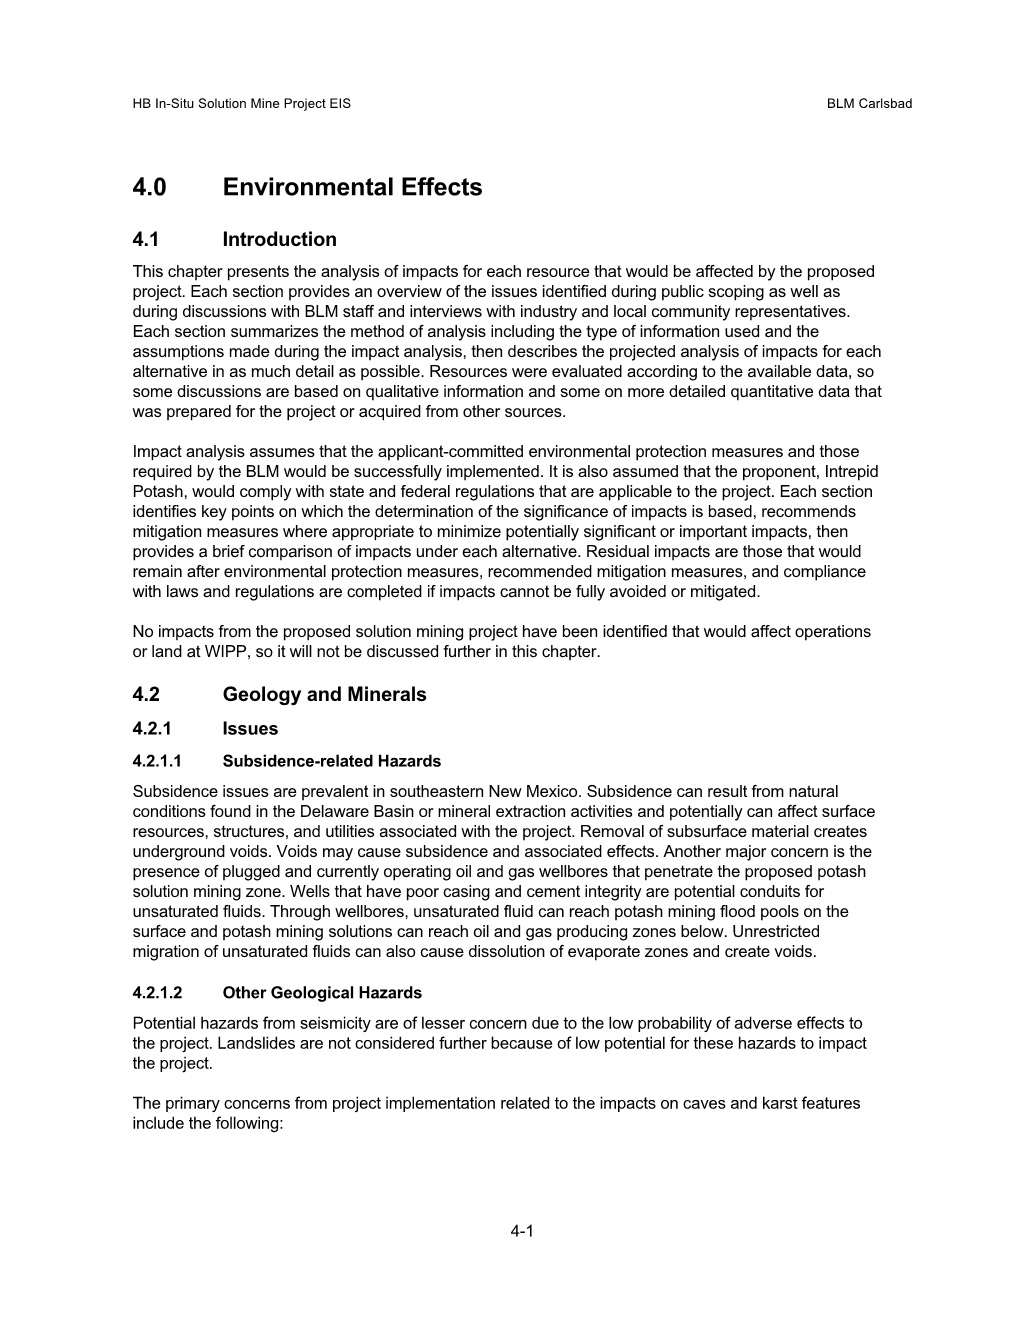 4.0 Environmental Effects